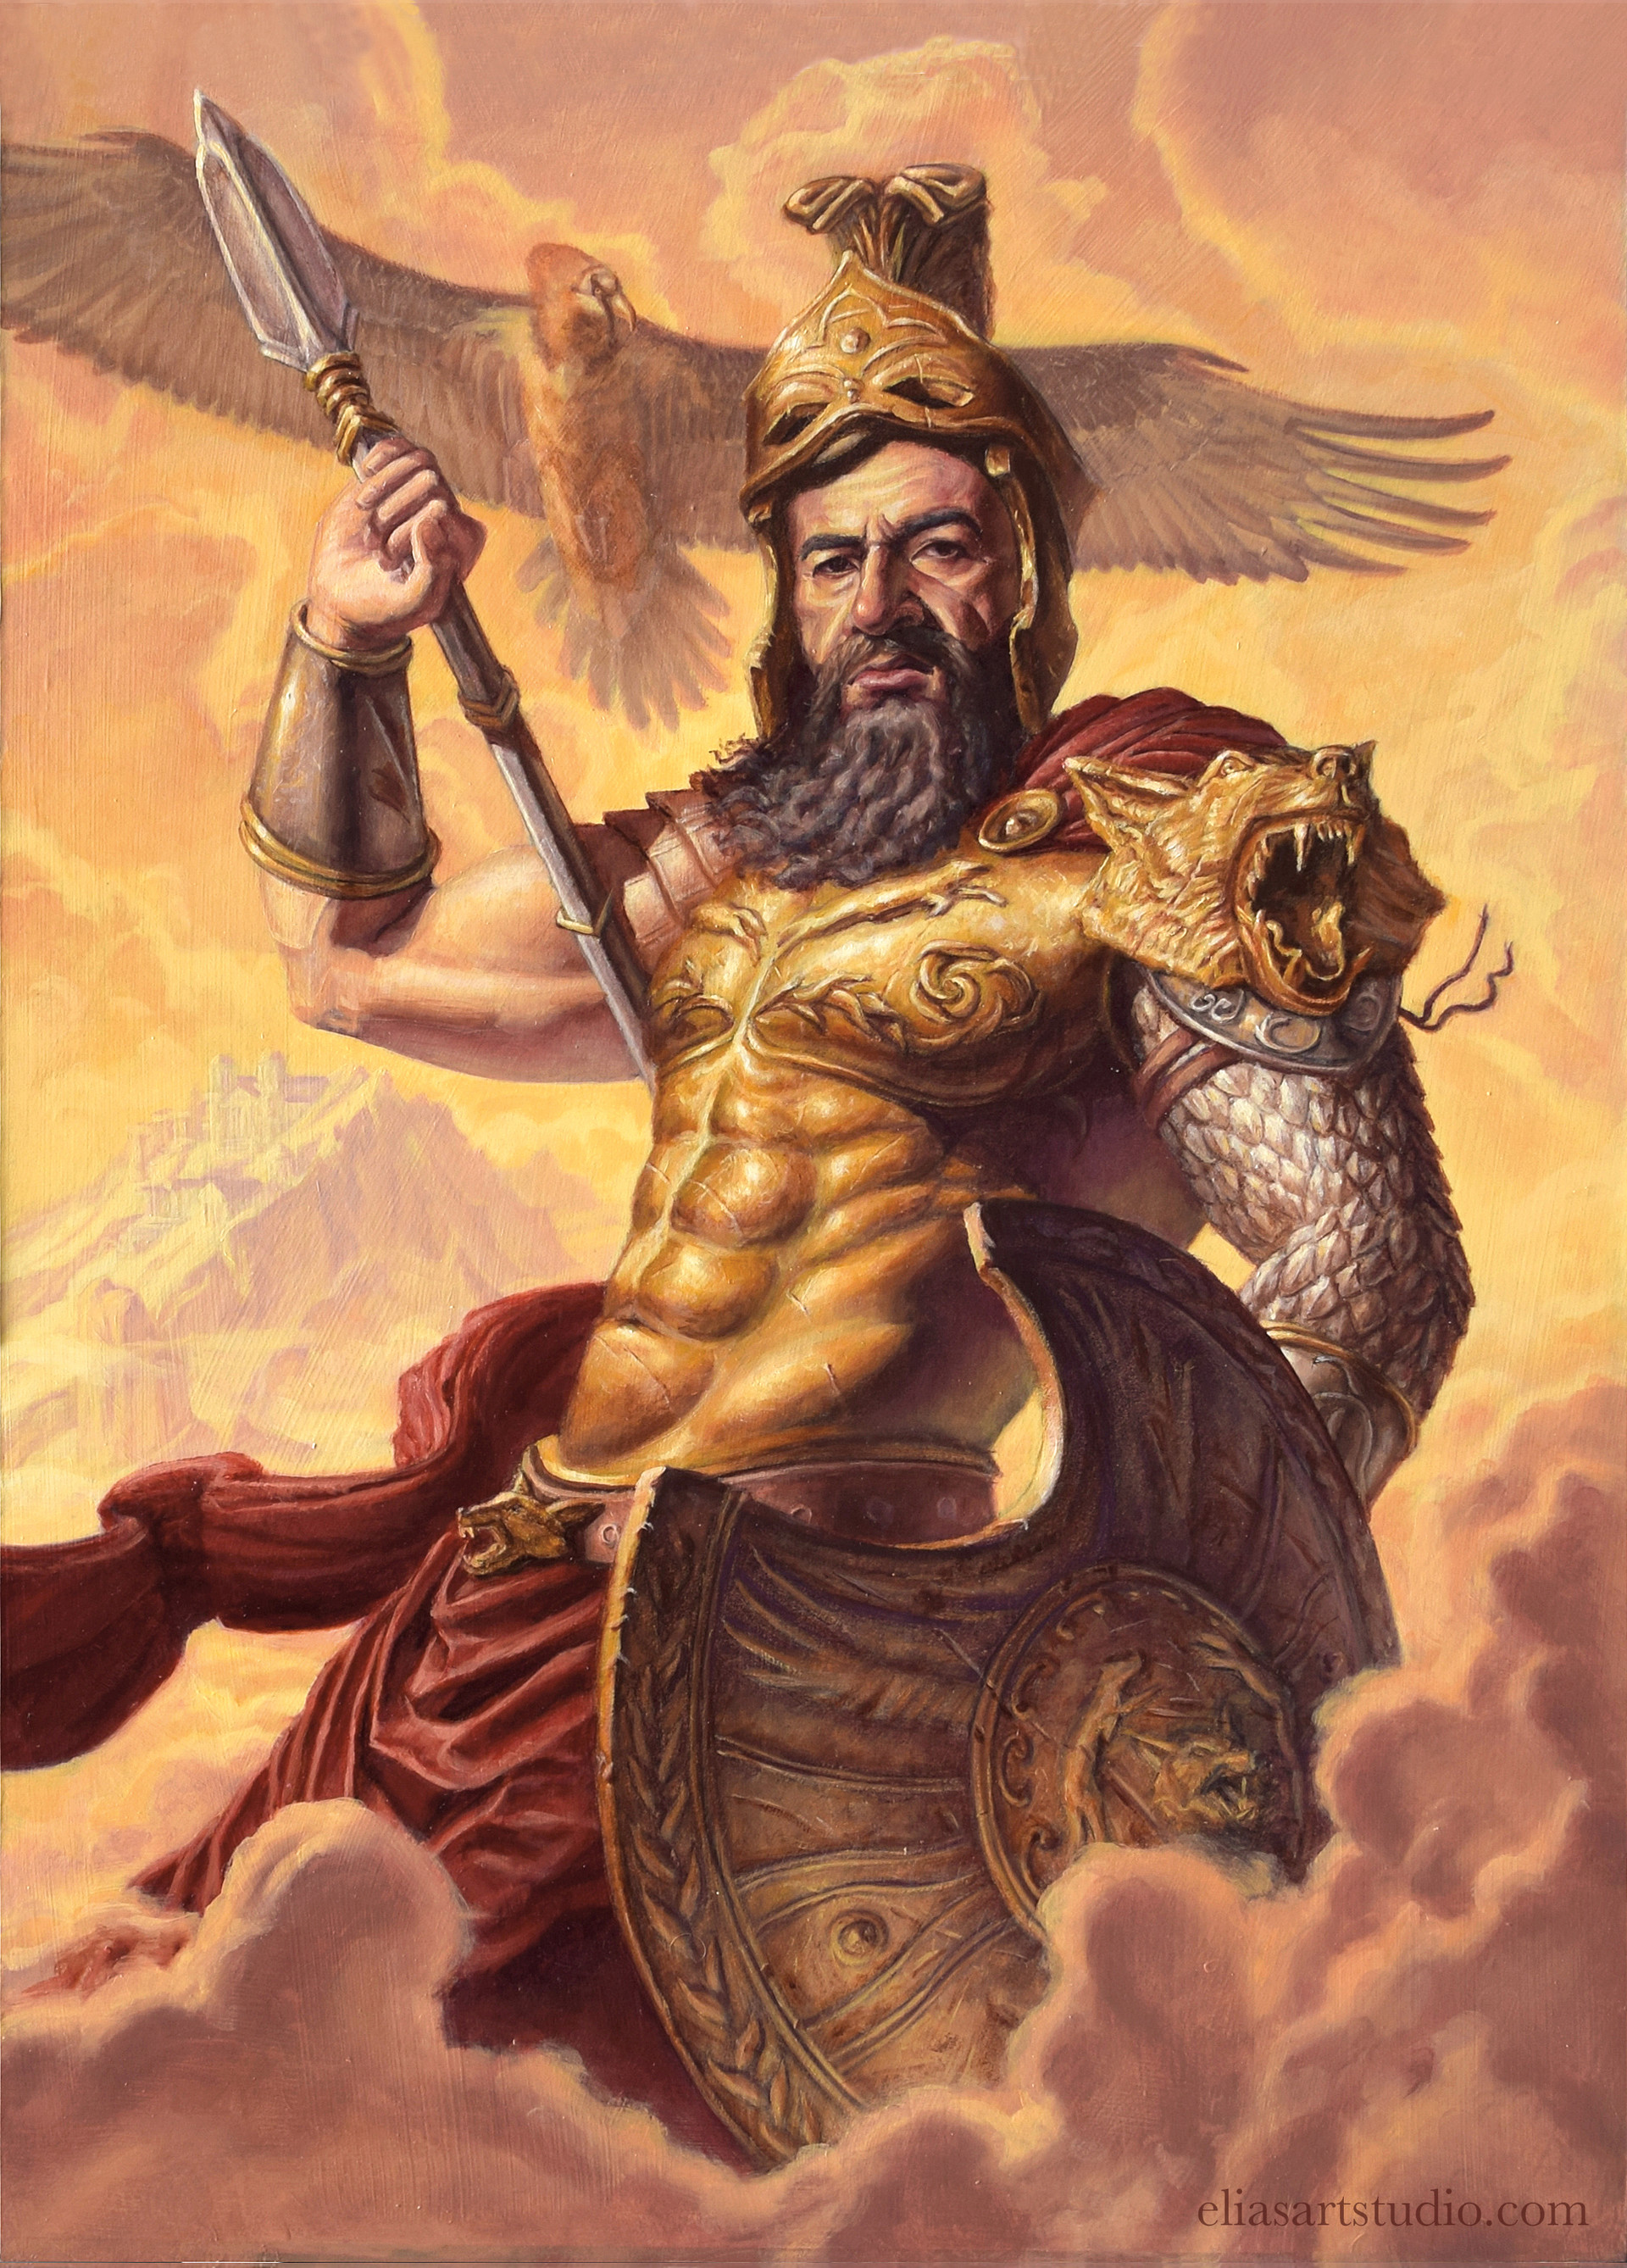 Ares - God of War (Illustration) - Ancient History Encyclopedia